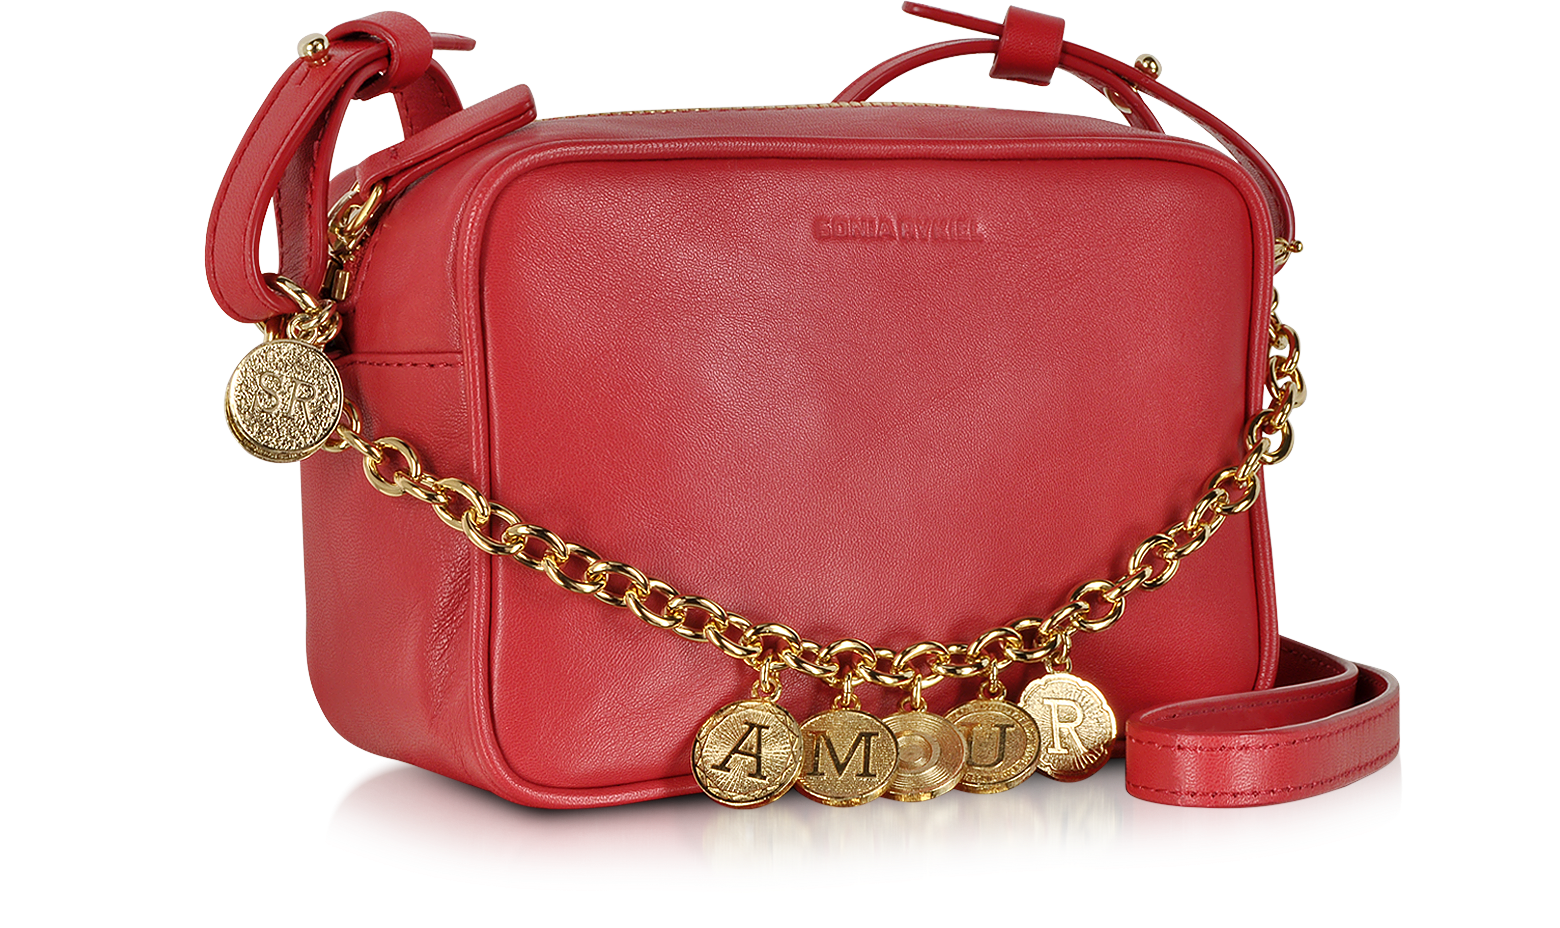 Sonia Rykiel Red Thibault Leather Crossbody Bag at FORZIERI